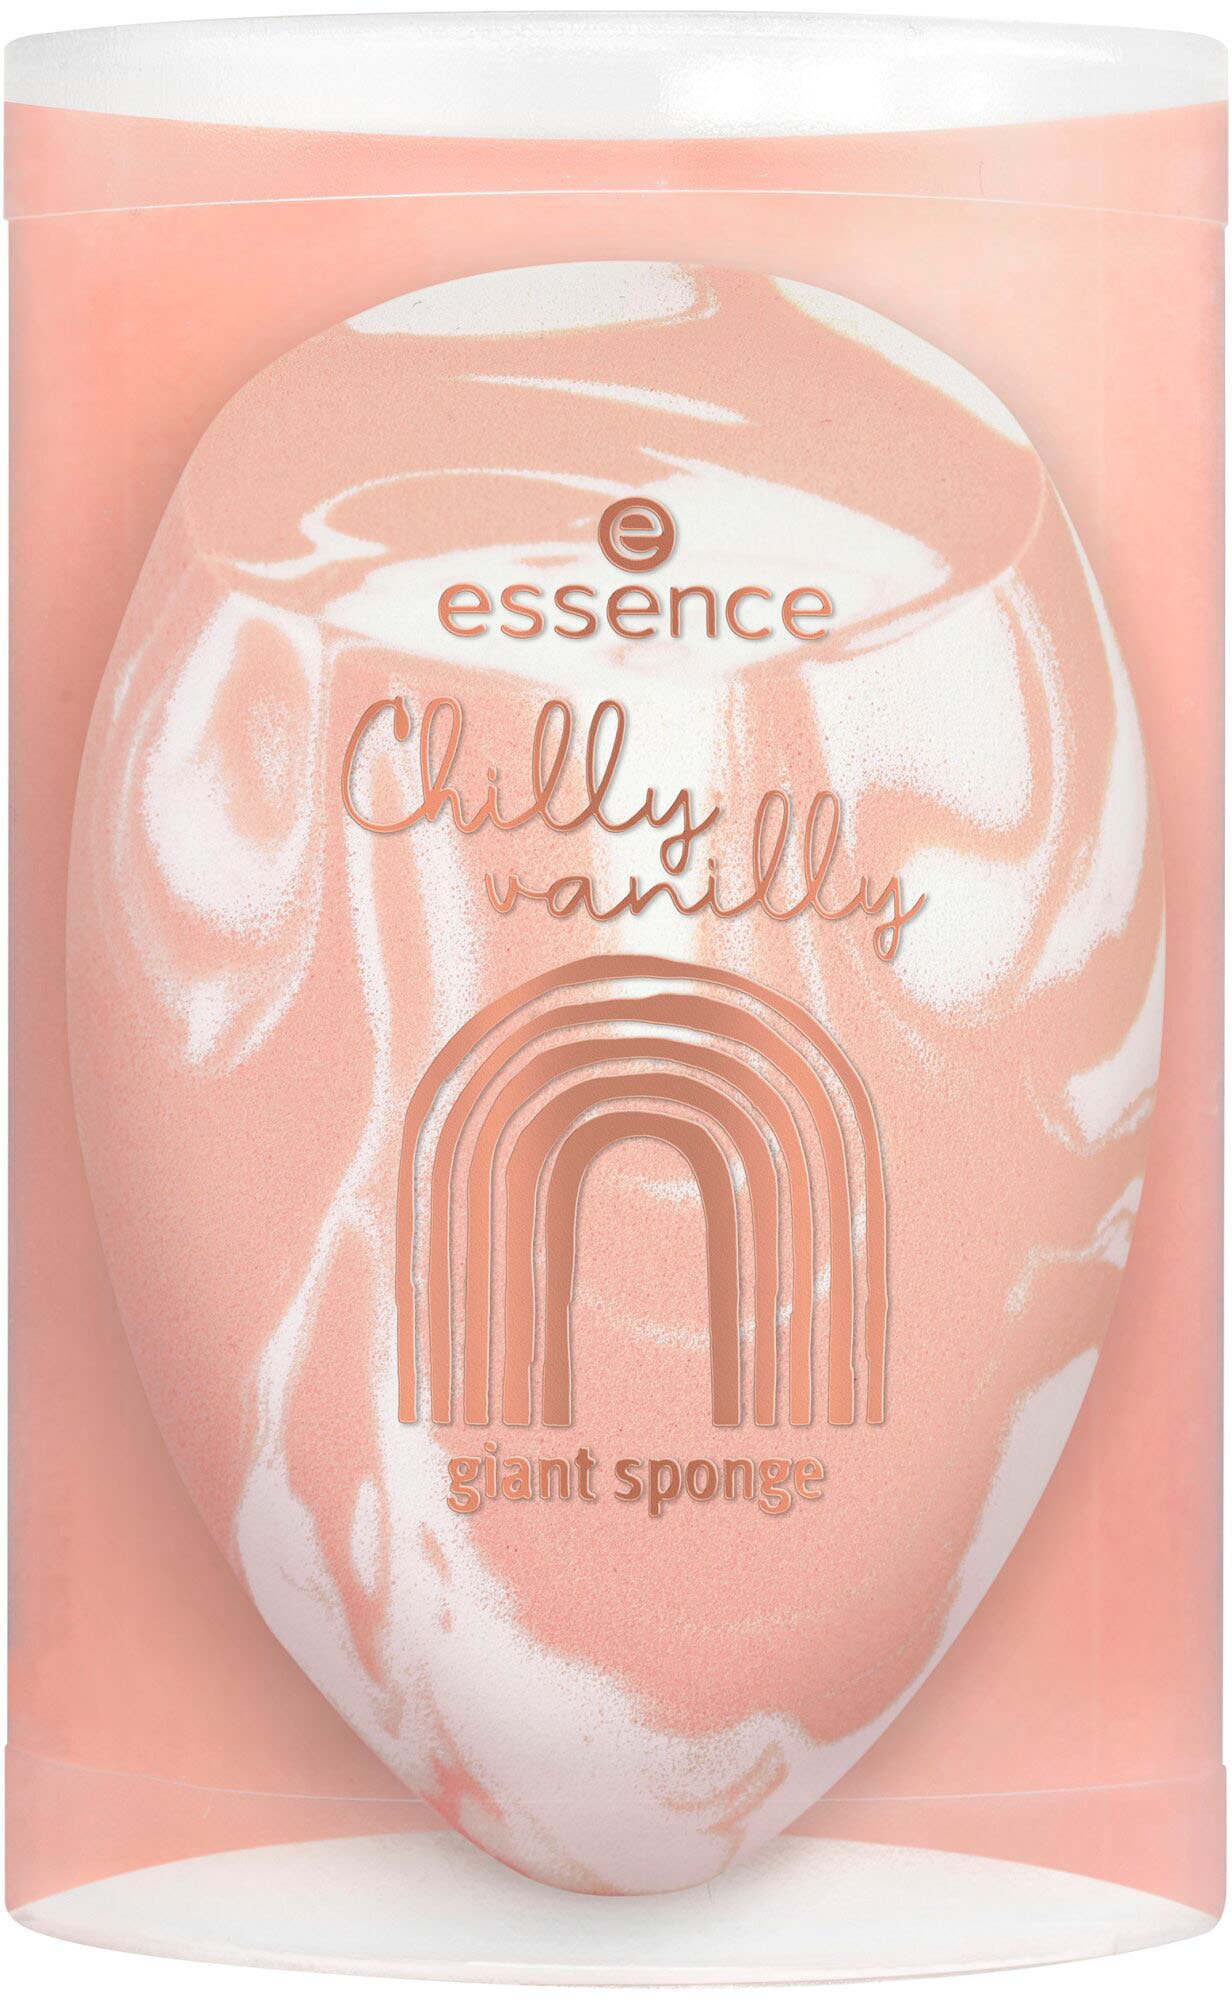 Essence Make-up Schwamm »Chilly vanilly 3 giant tlg.) bei sponge«, online UNIVERSAL (Set